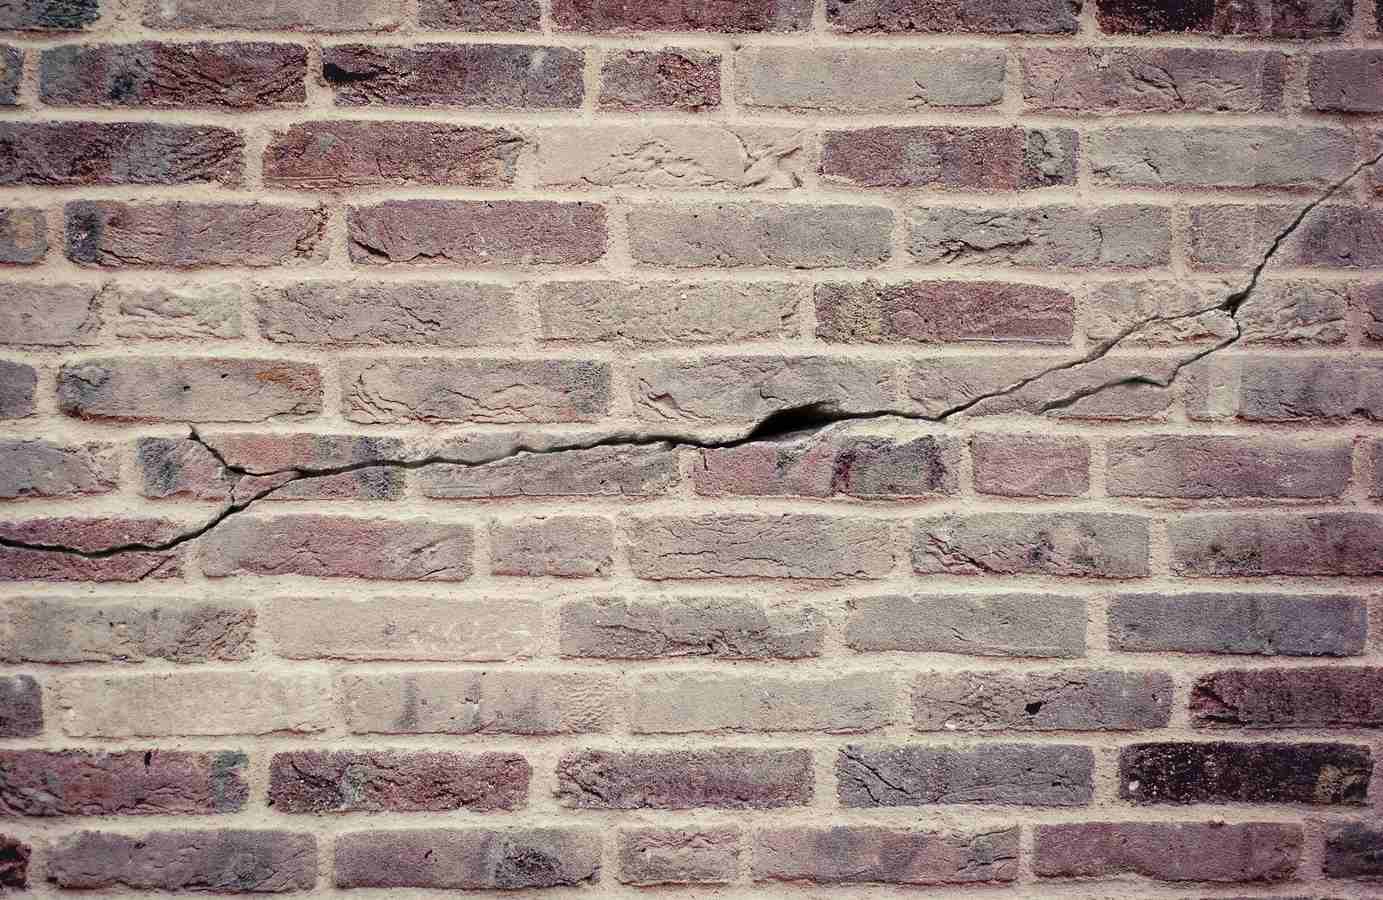 Horizontal cracks in a brick wall